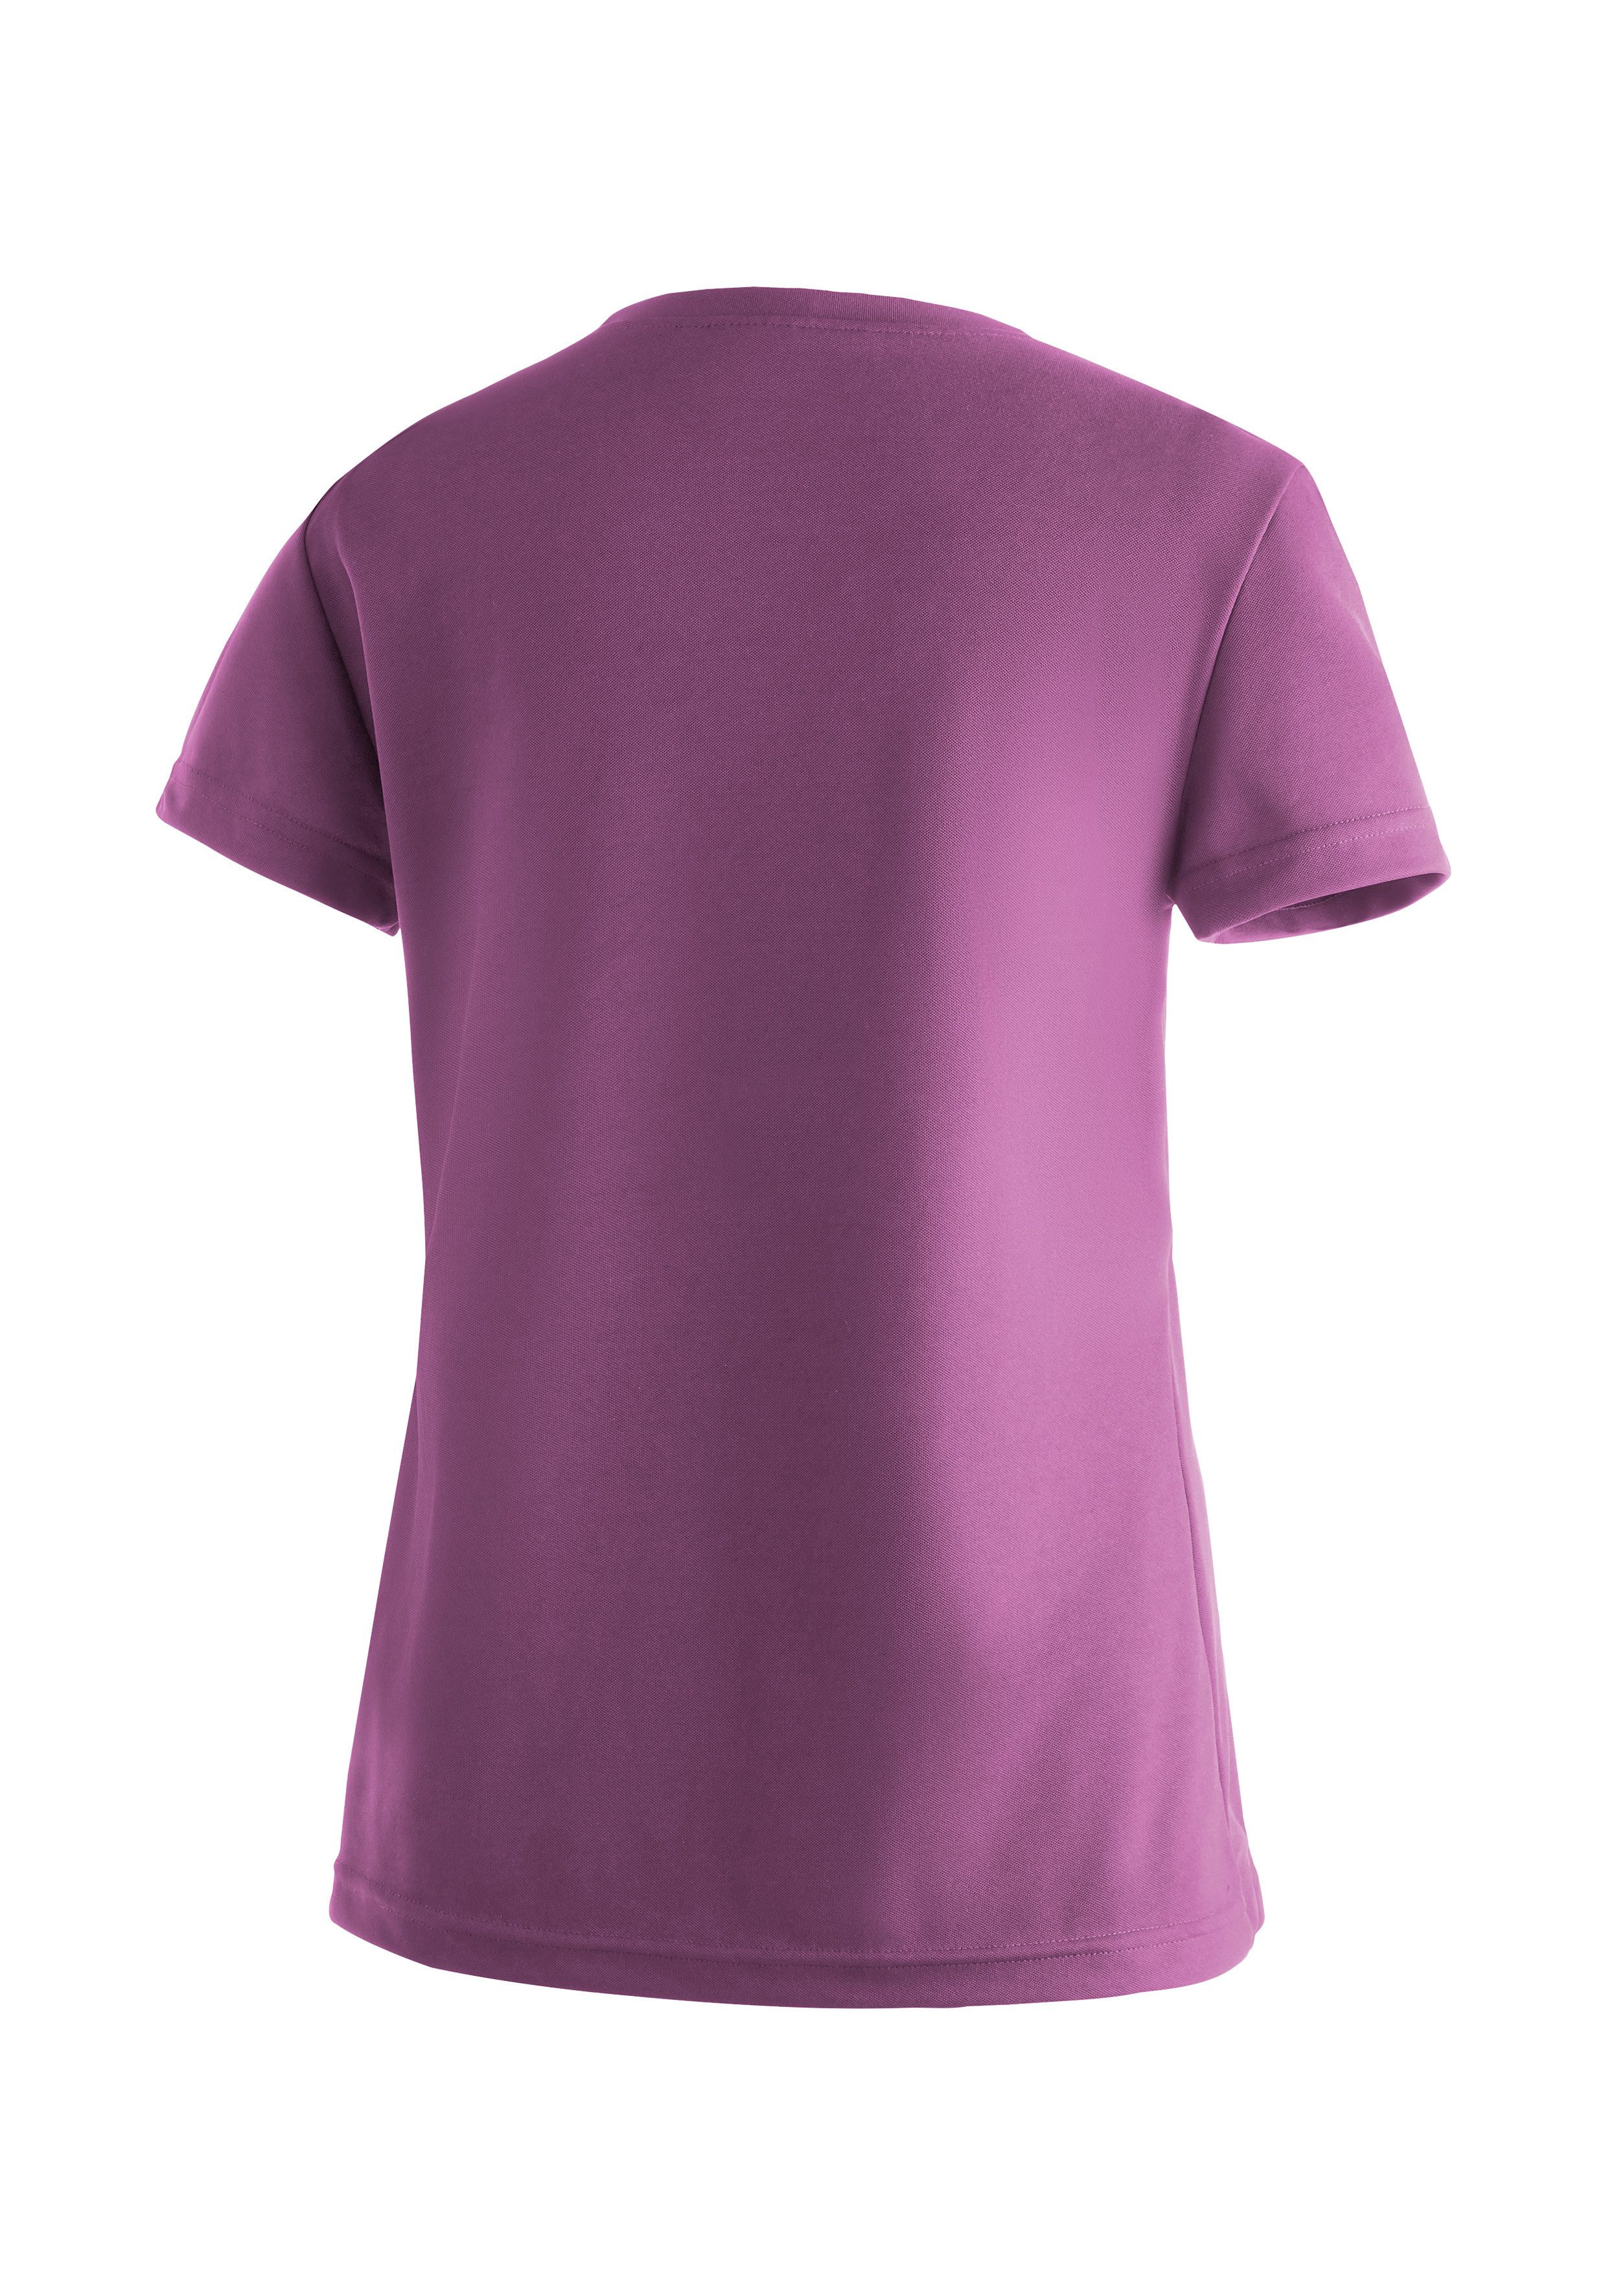 Maier Sports Functioneel shirt Waltraud comfortabel en sneldrogend